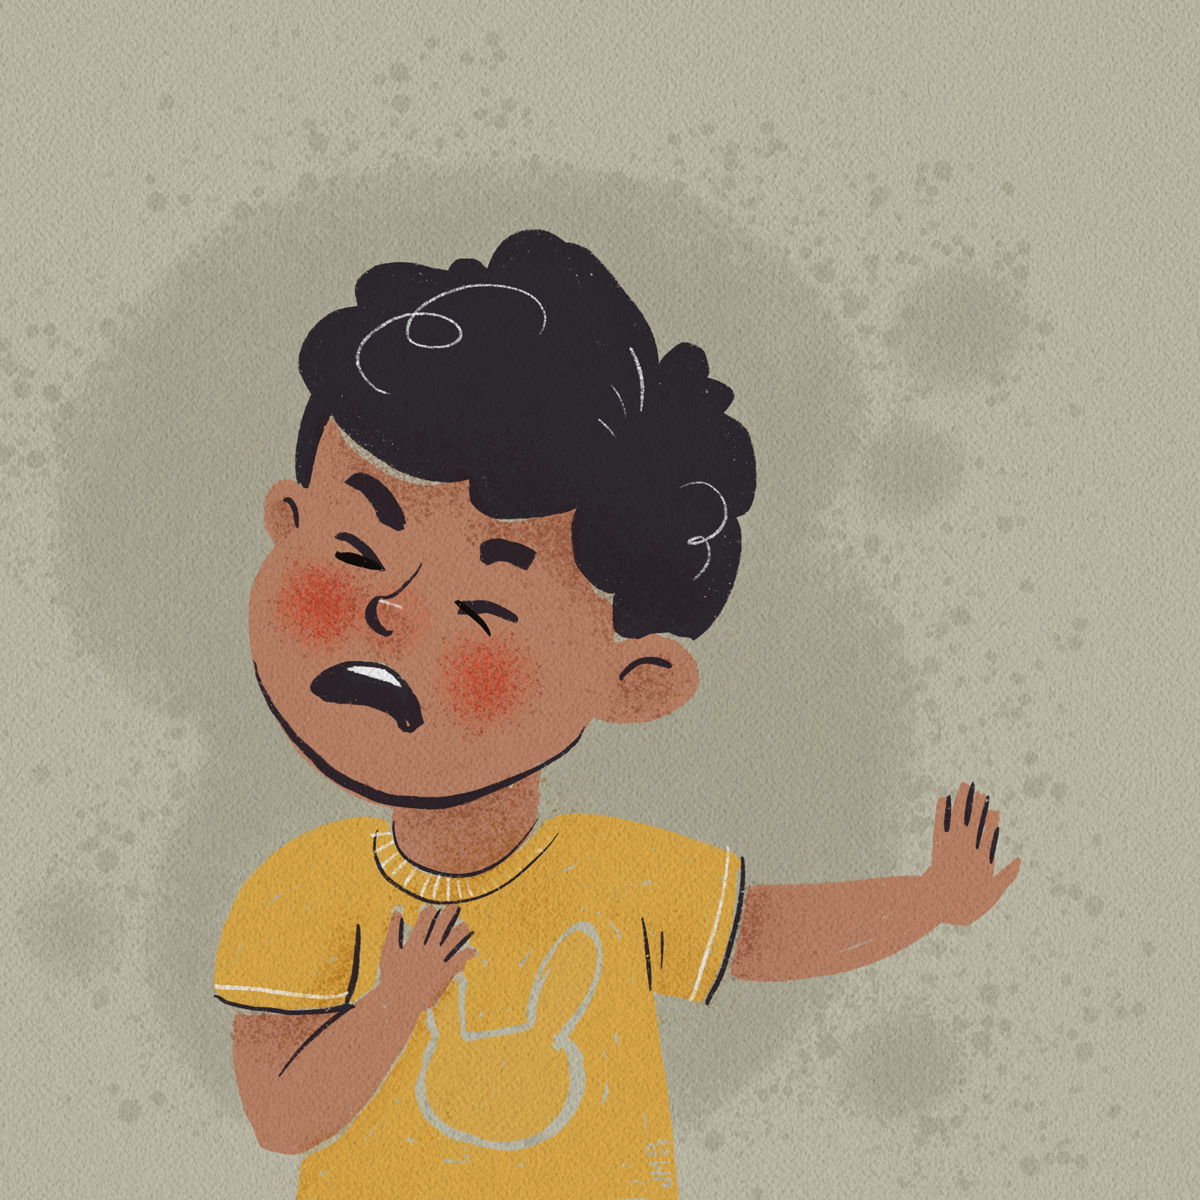 Illustration of boy refusing demand (PDA)